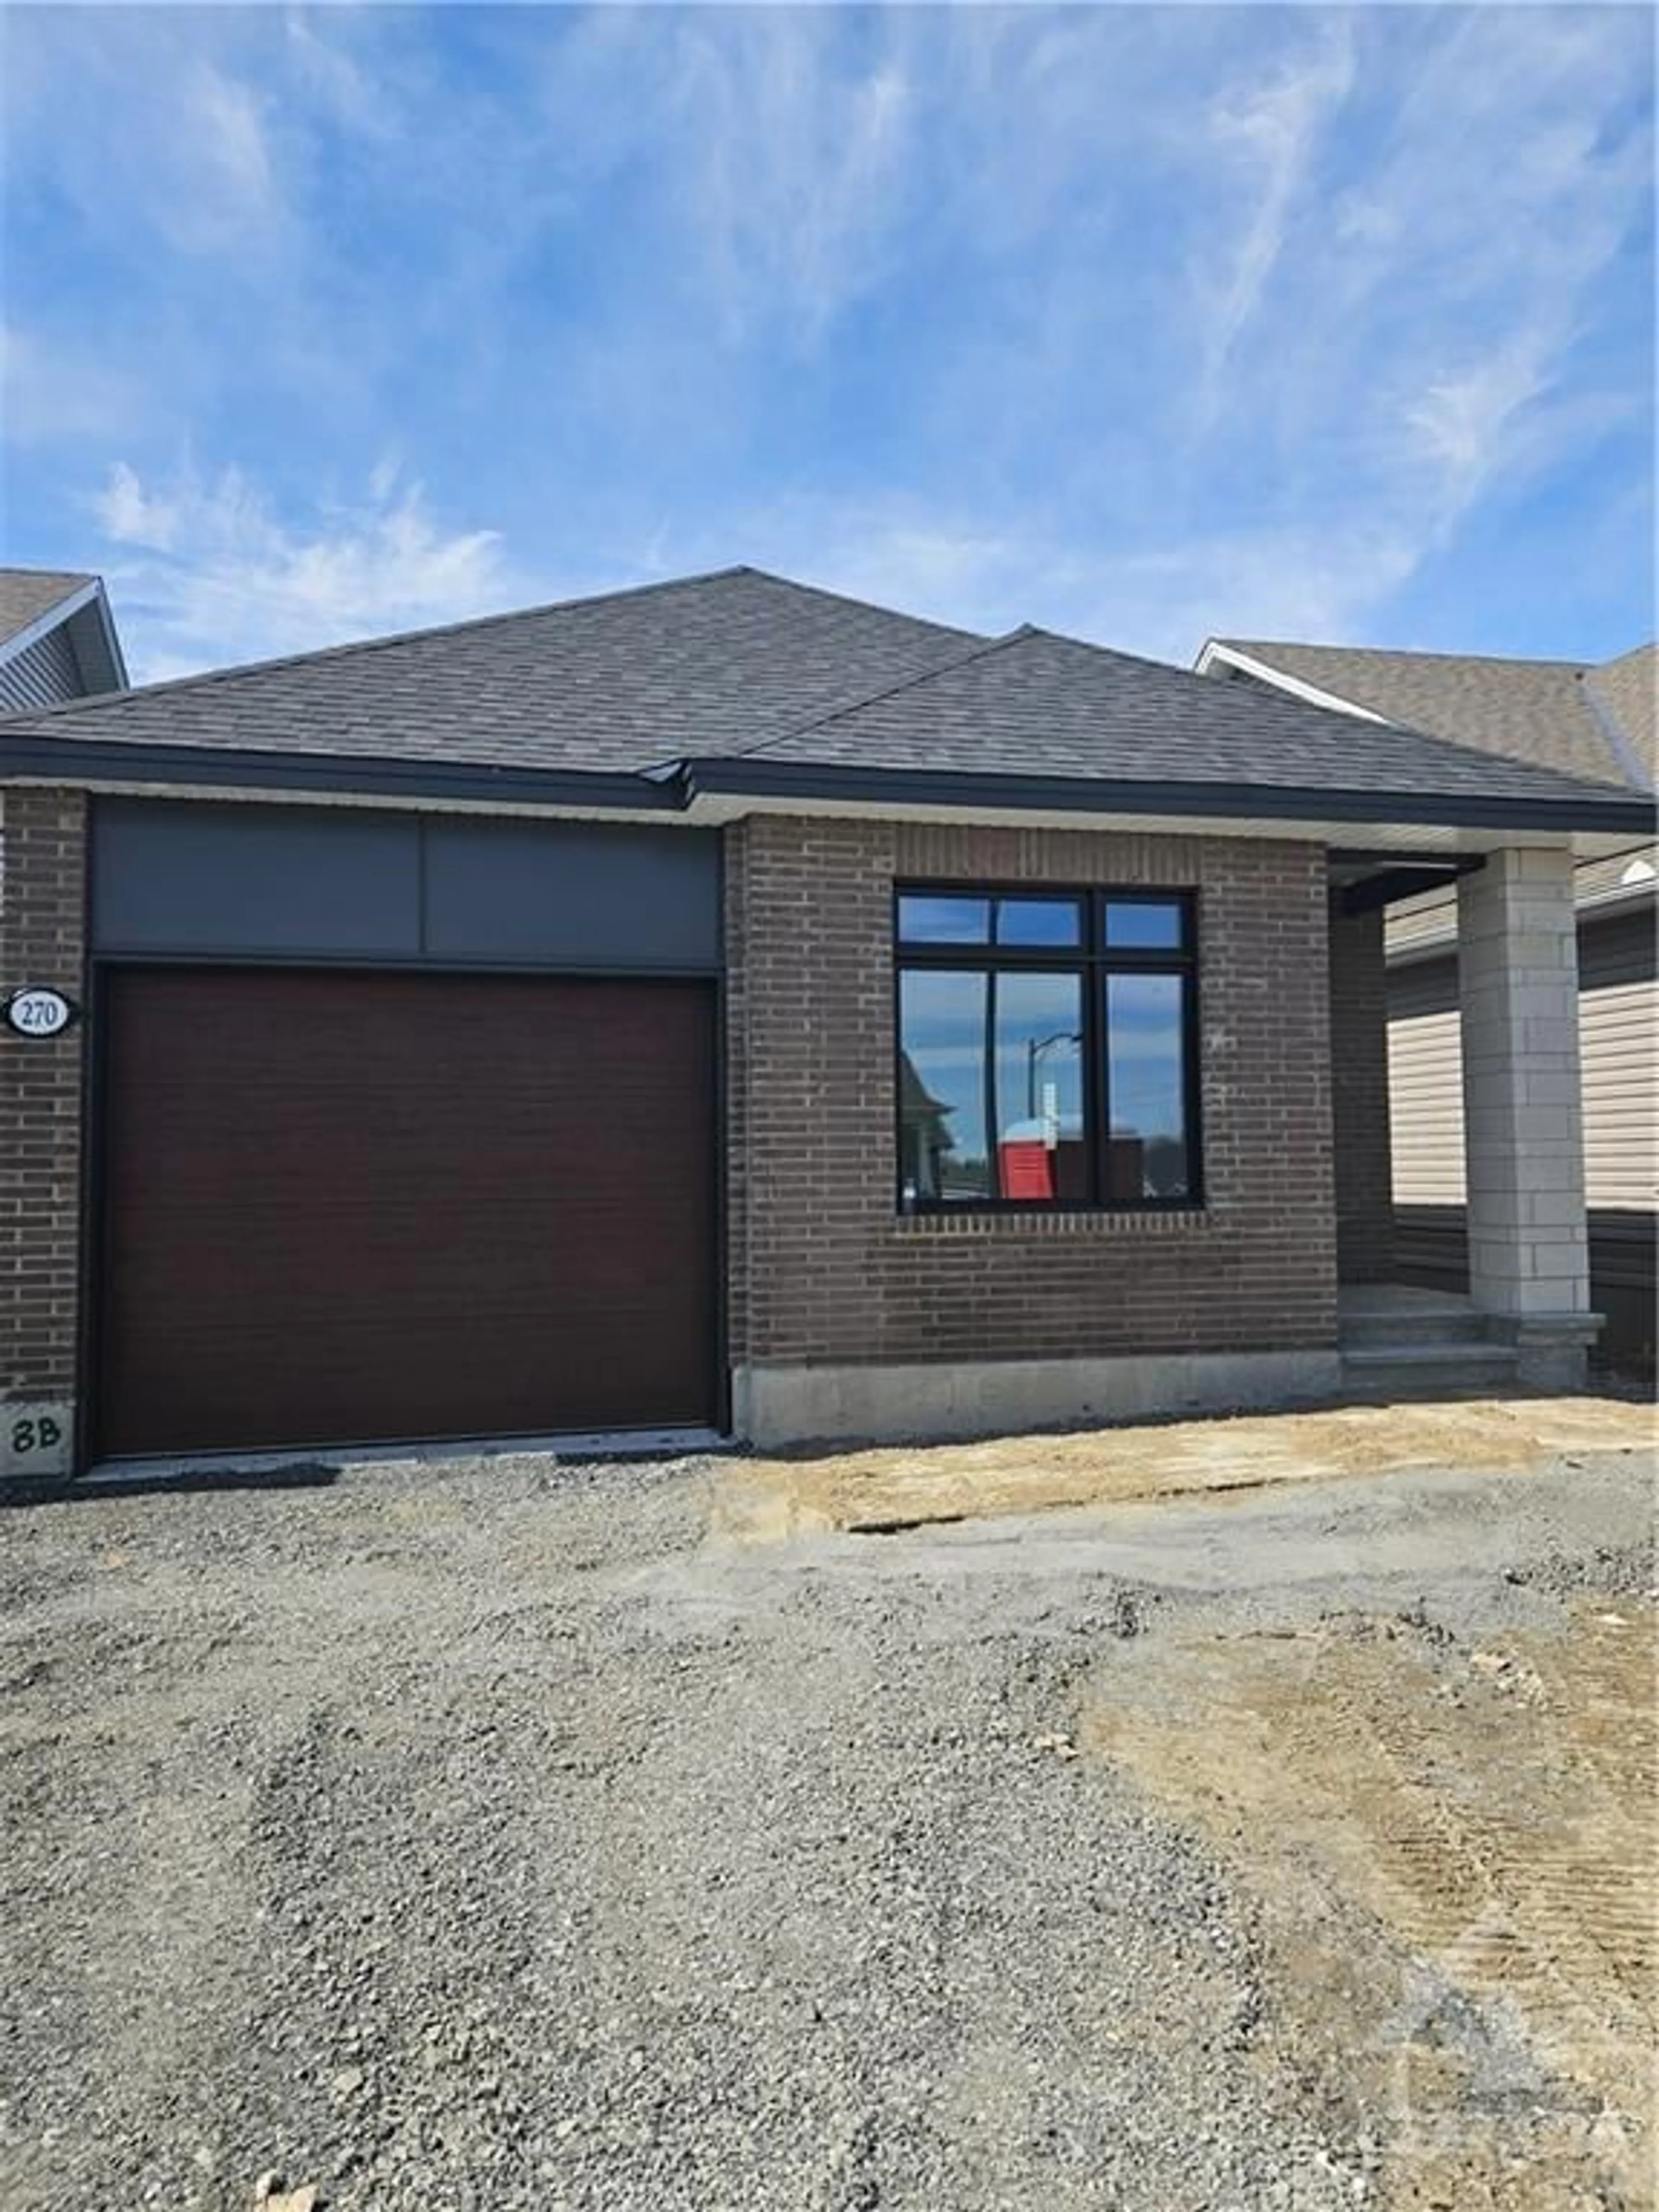 Home with brick exterior material for 270 MAYGRASS Way, Ottawa Ontario K2S 2K9